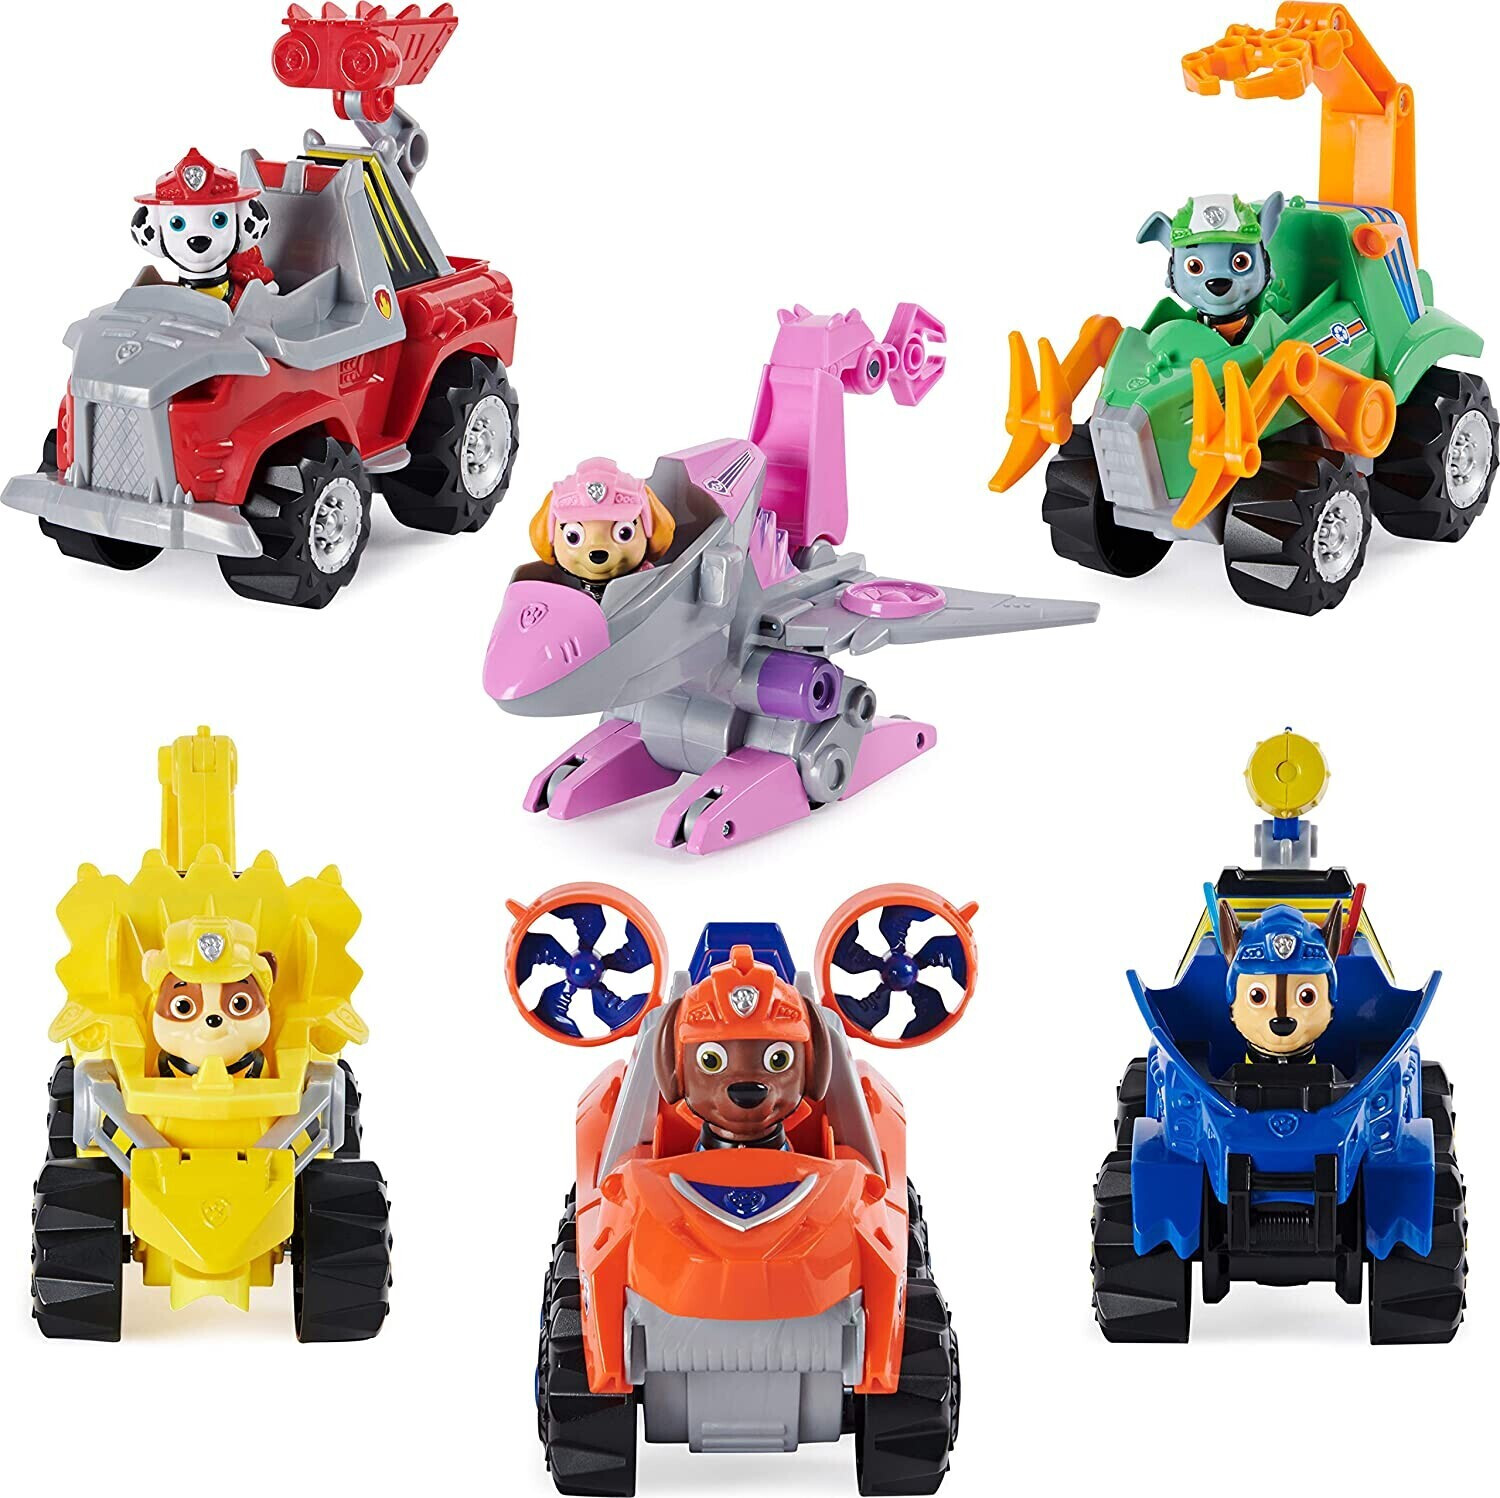 Spin Master La Pat' Patrouille 6056930 Children's Toy Vehicle +